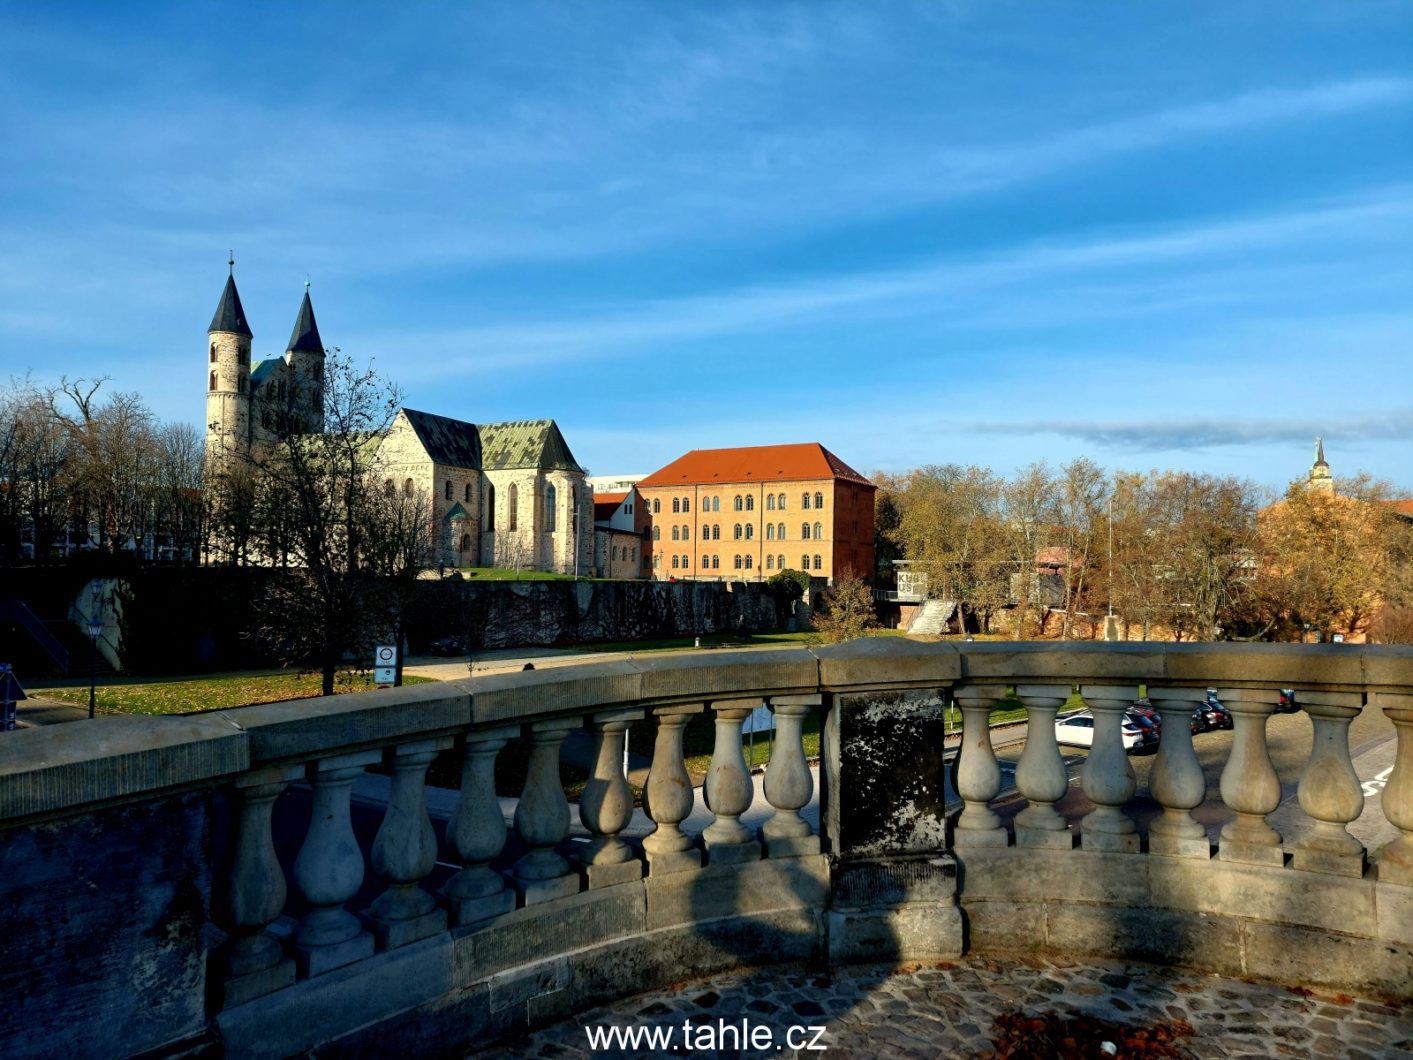 Magdeburg 